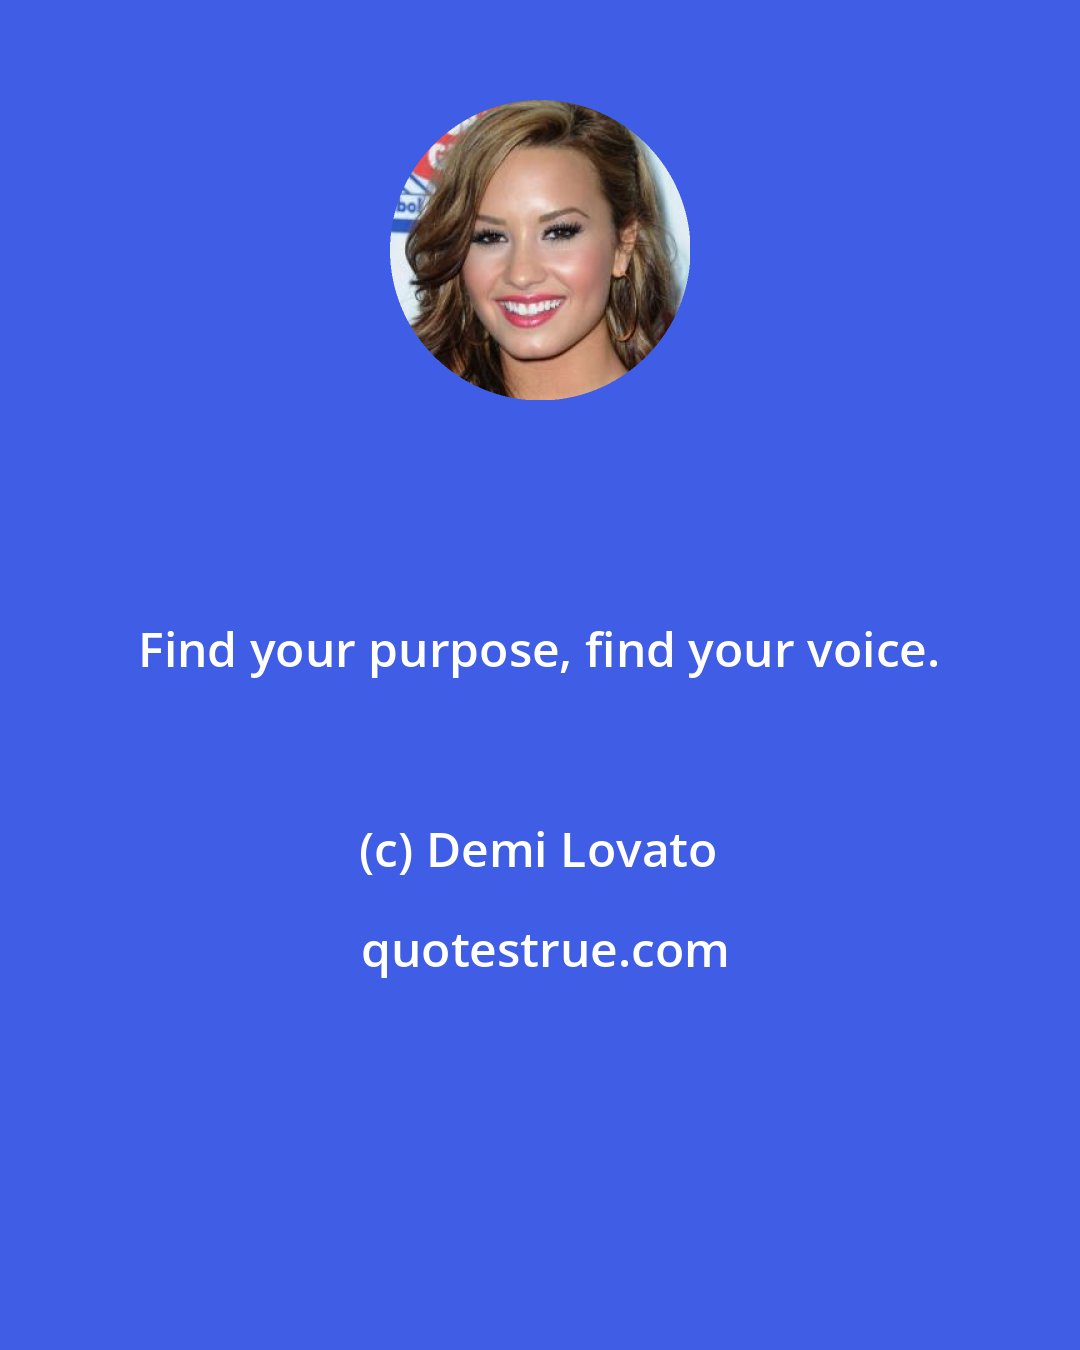 Demi Lovato: Find your purpose, find your voice.